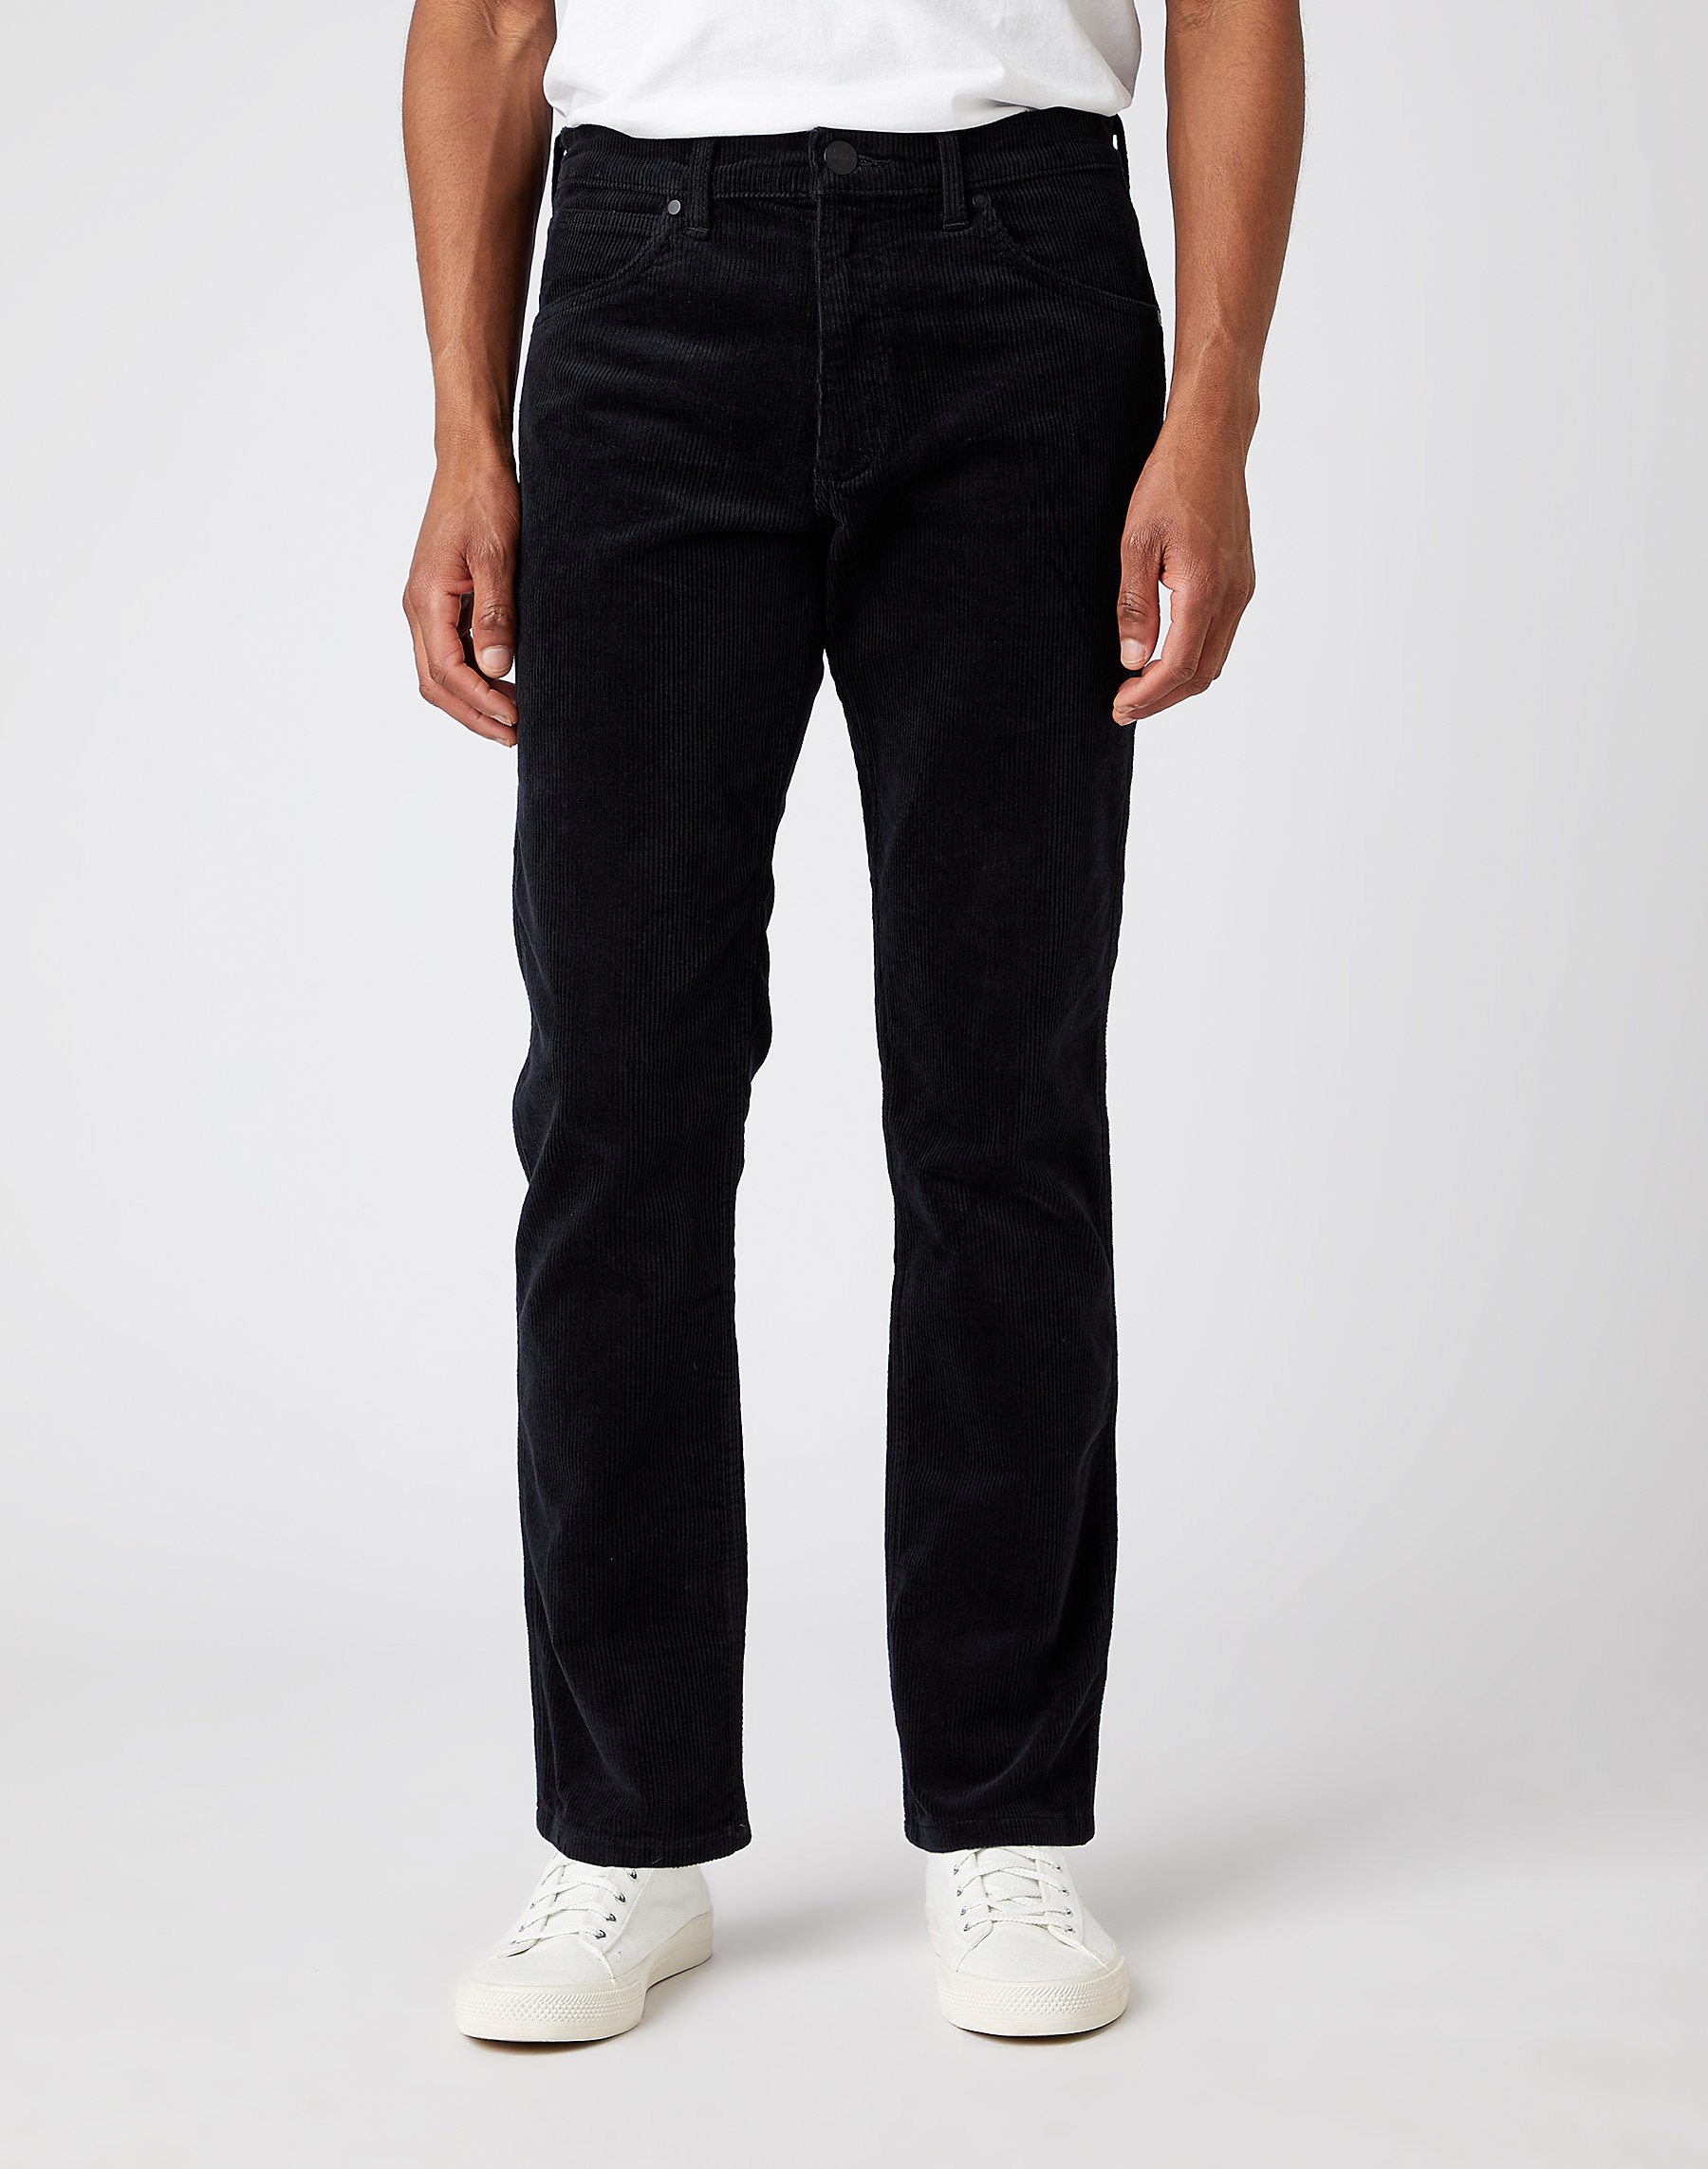 Pánské manšestrové kalhoty WRANGLER W15QA2100 GREENSBORO STRETCH Black Velikost Pas/Délka: 42/32